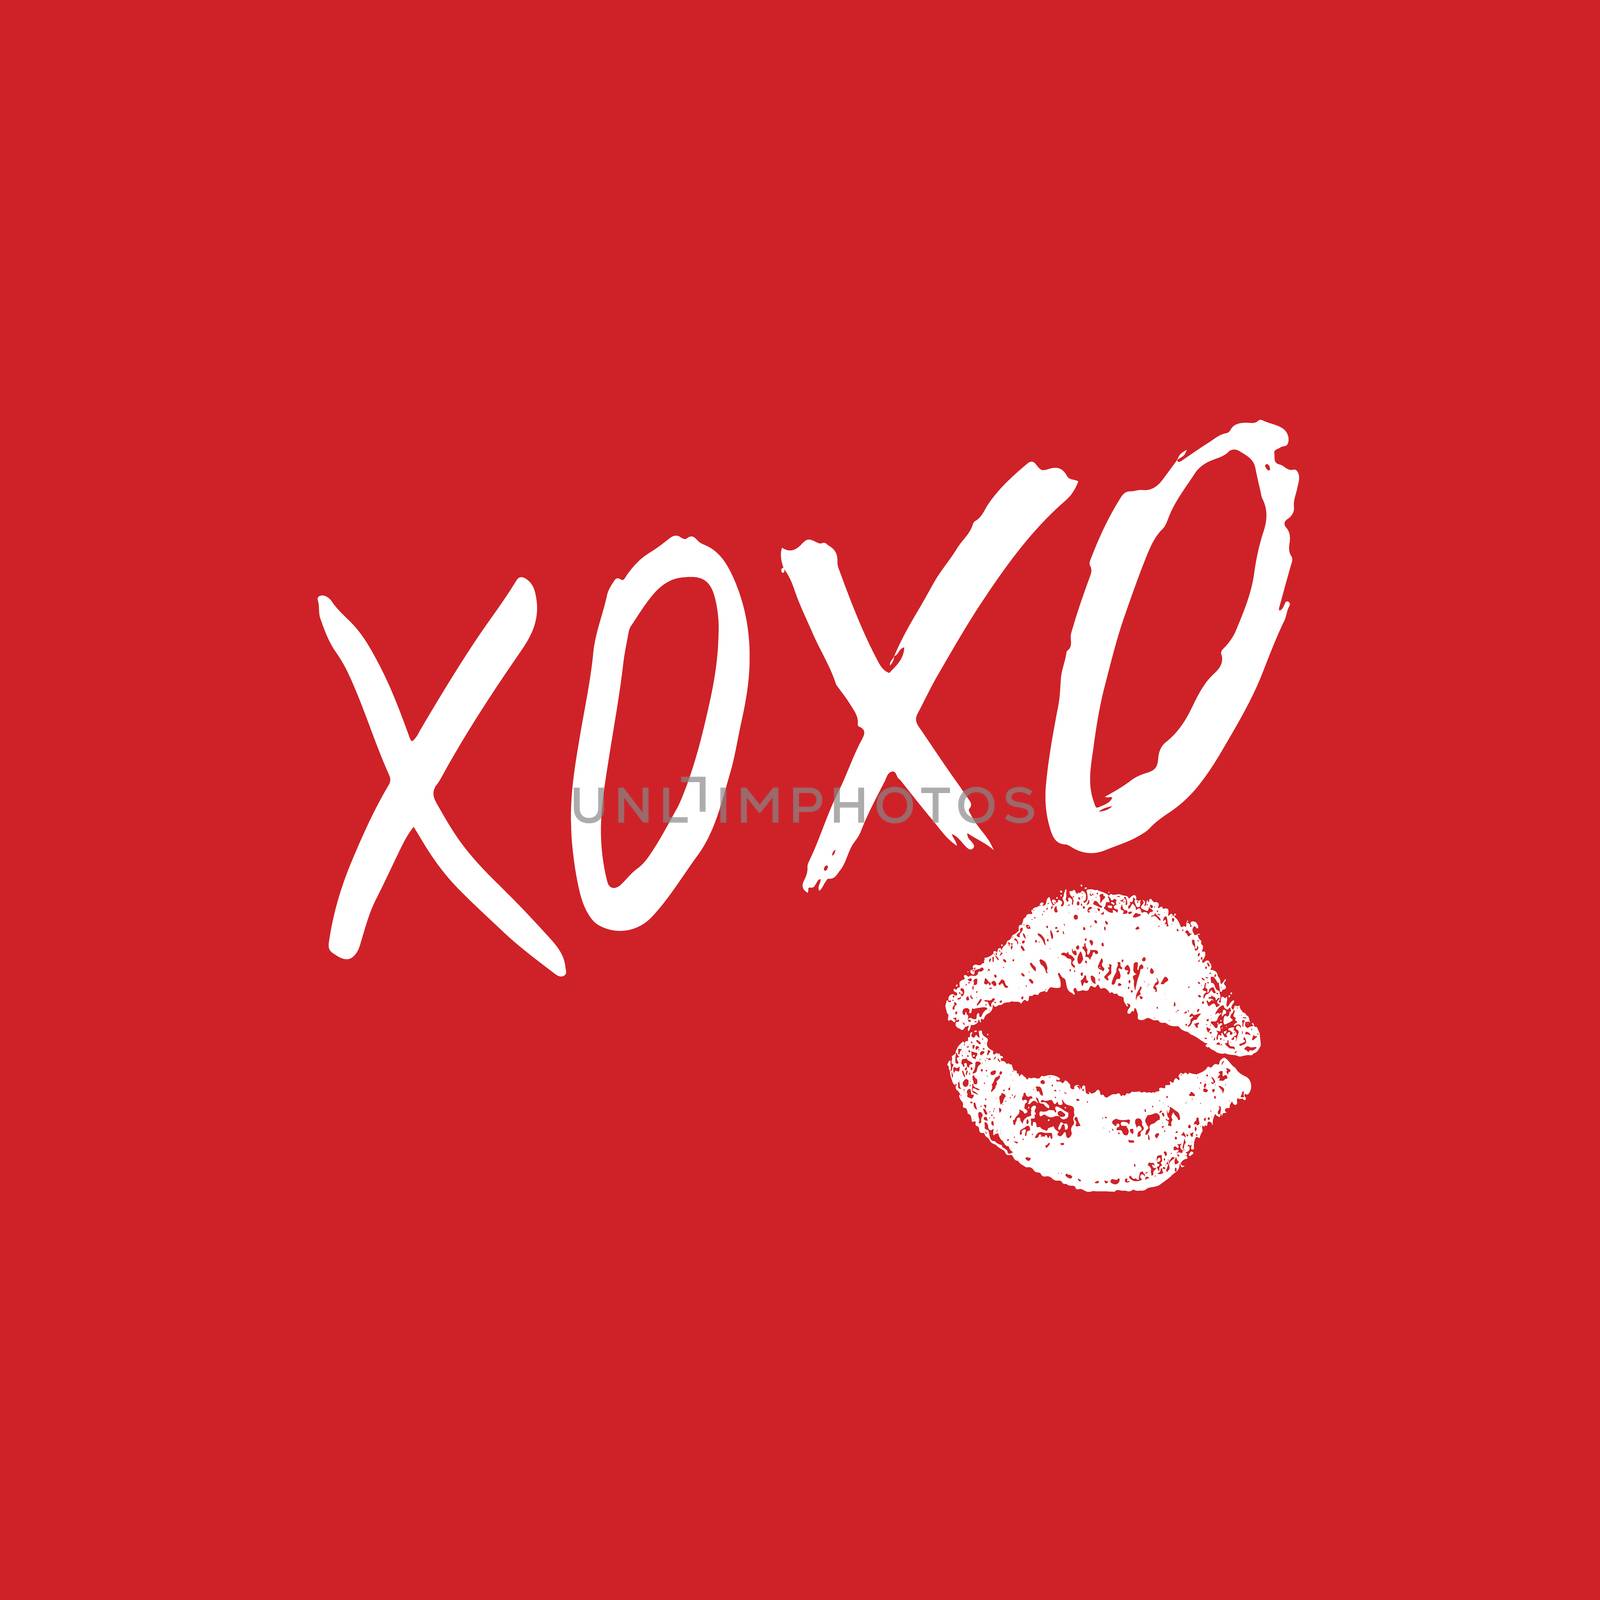 XOXO brush lettering sign, Grunge calligraphic hugs and kisses Phrase, Internet slang abbreviation XOXO symbols, vector illustration.